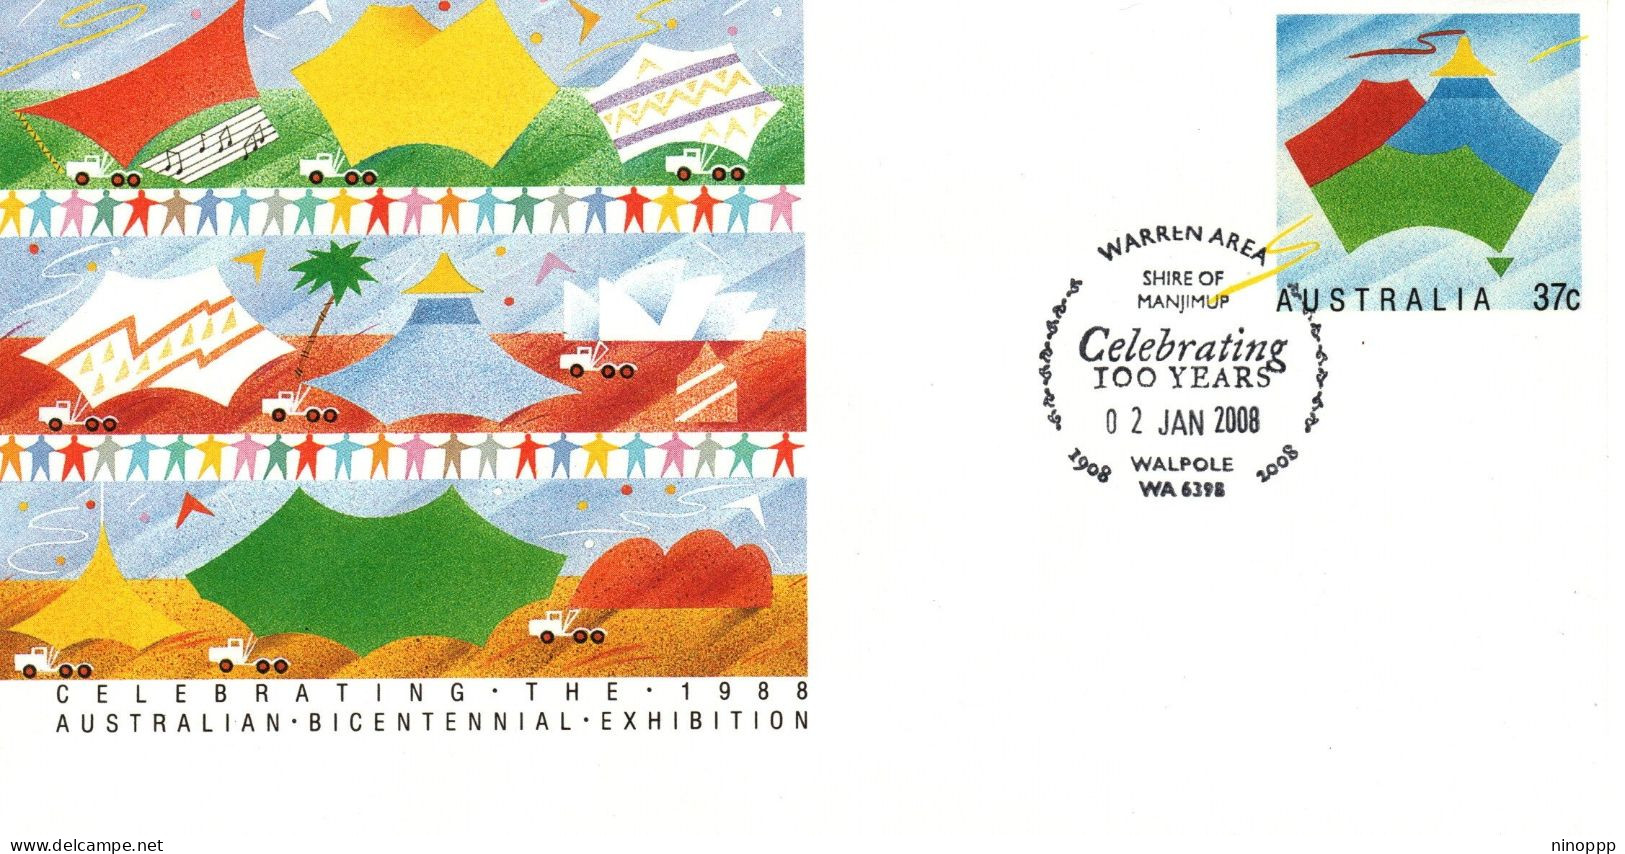 Australia 2008 ,Warren Area Celebrating 100 Years,Walpole Postmark,souvenir Cover - Postmark Collection